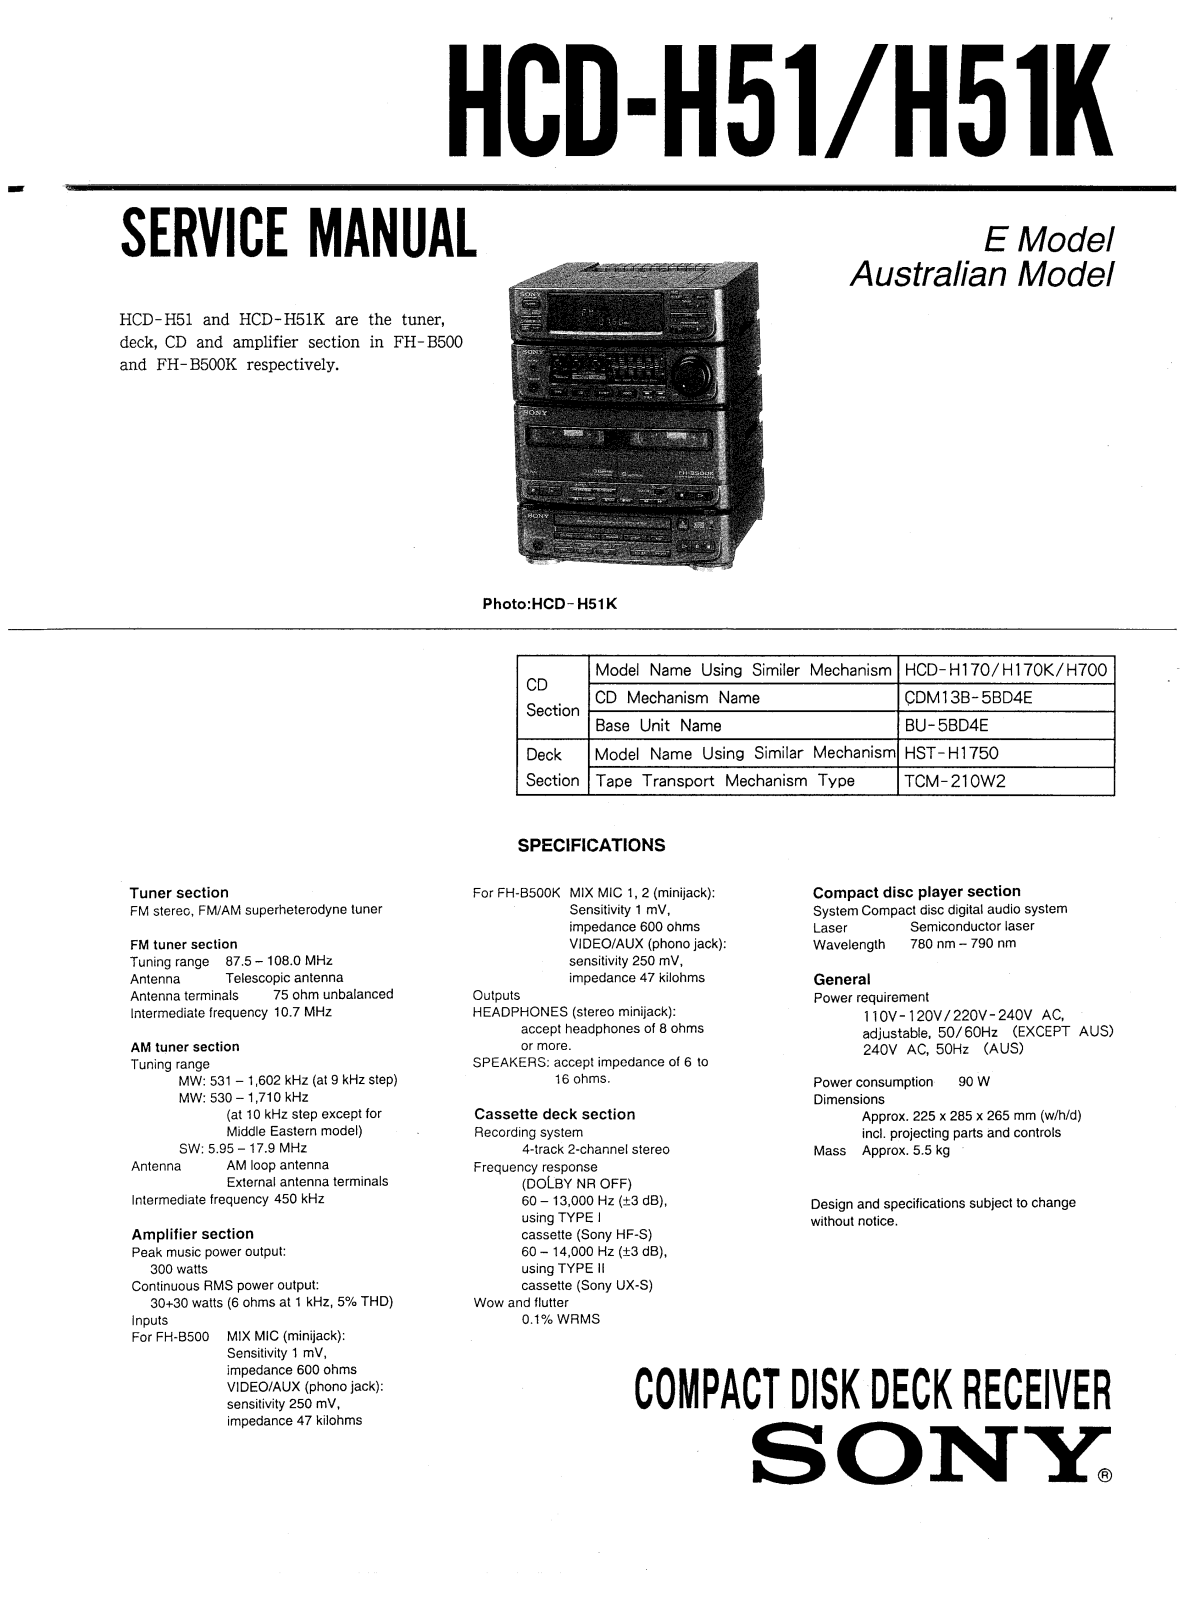 Sony HCD-H51, HCD-H51K Service Manual